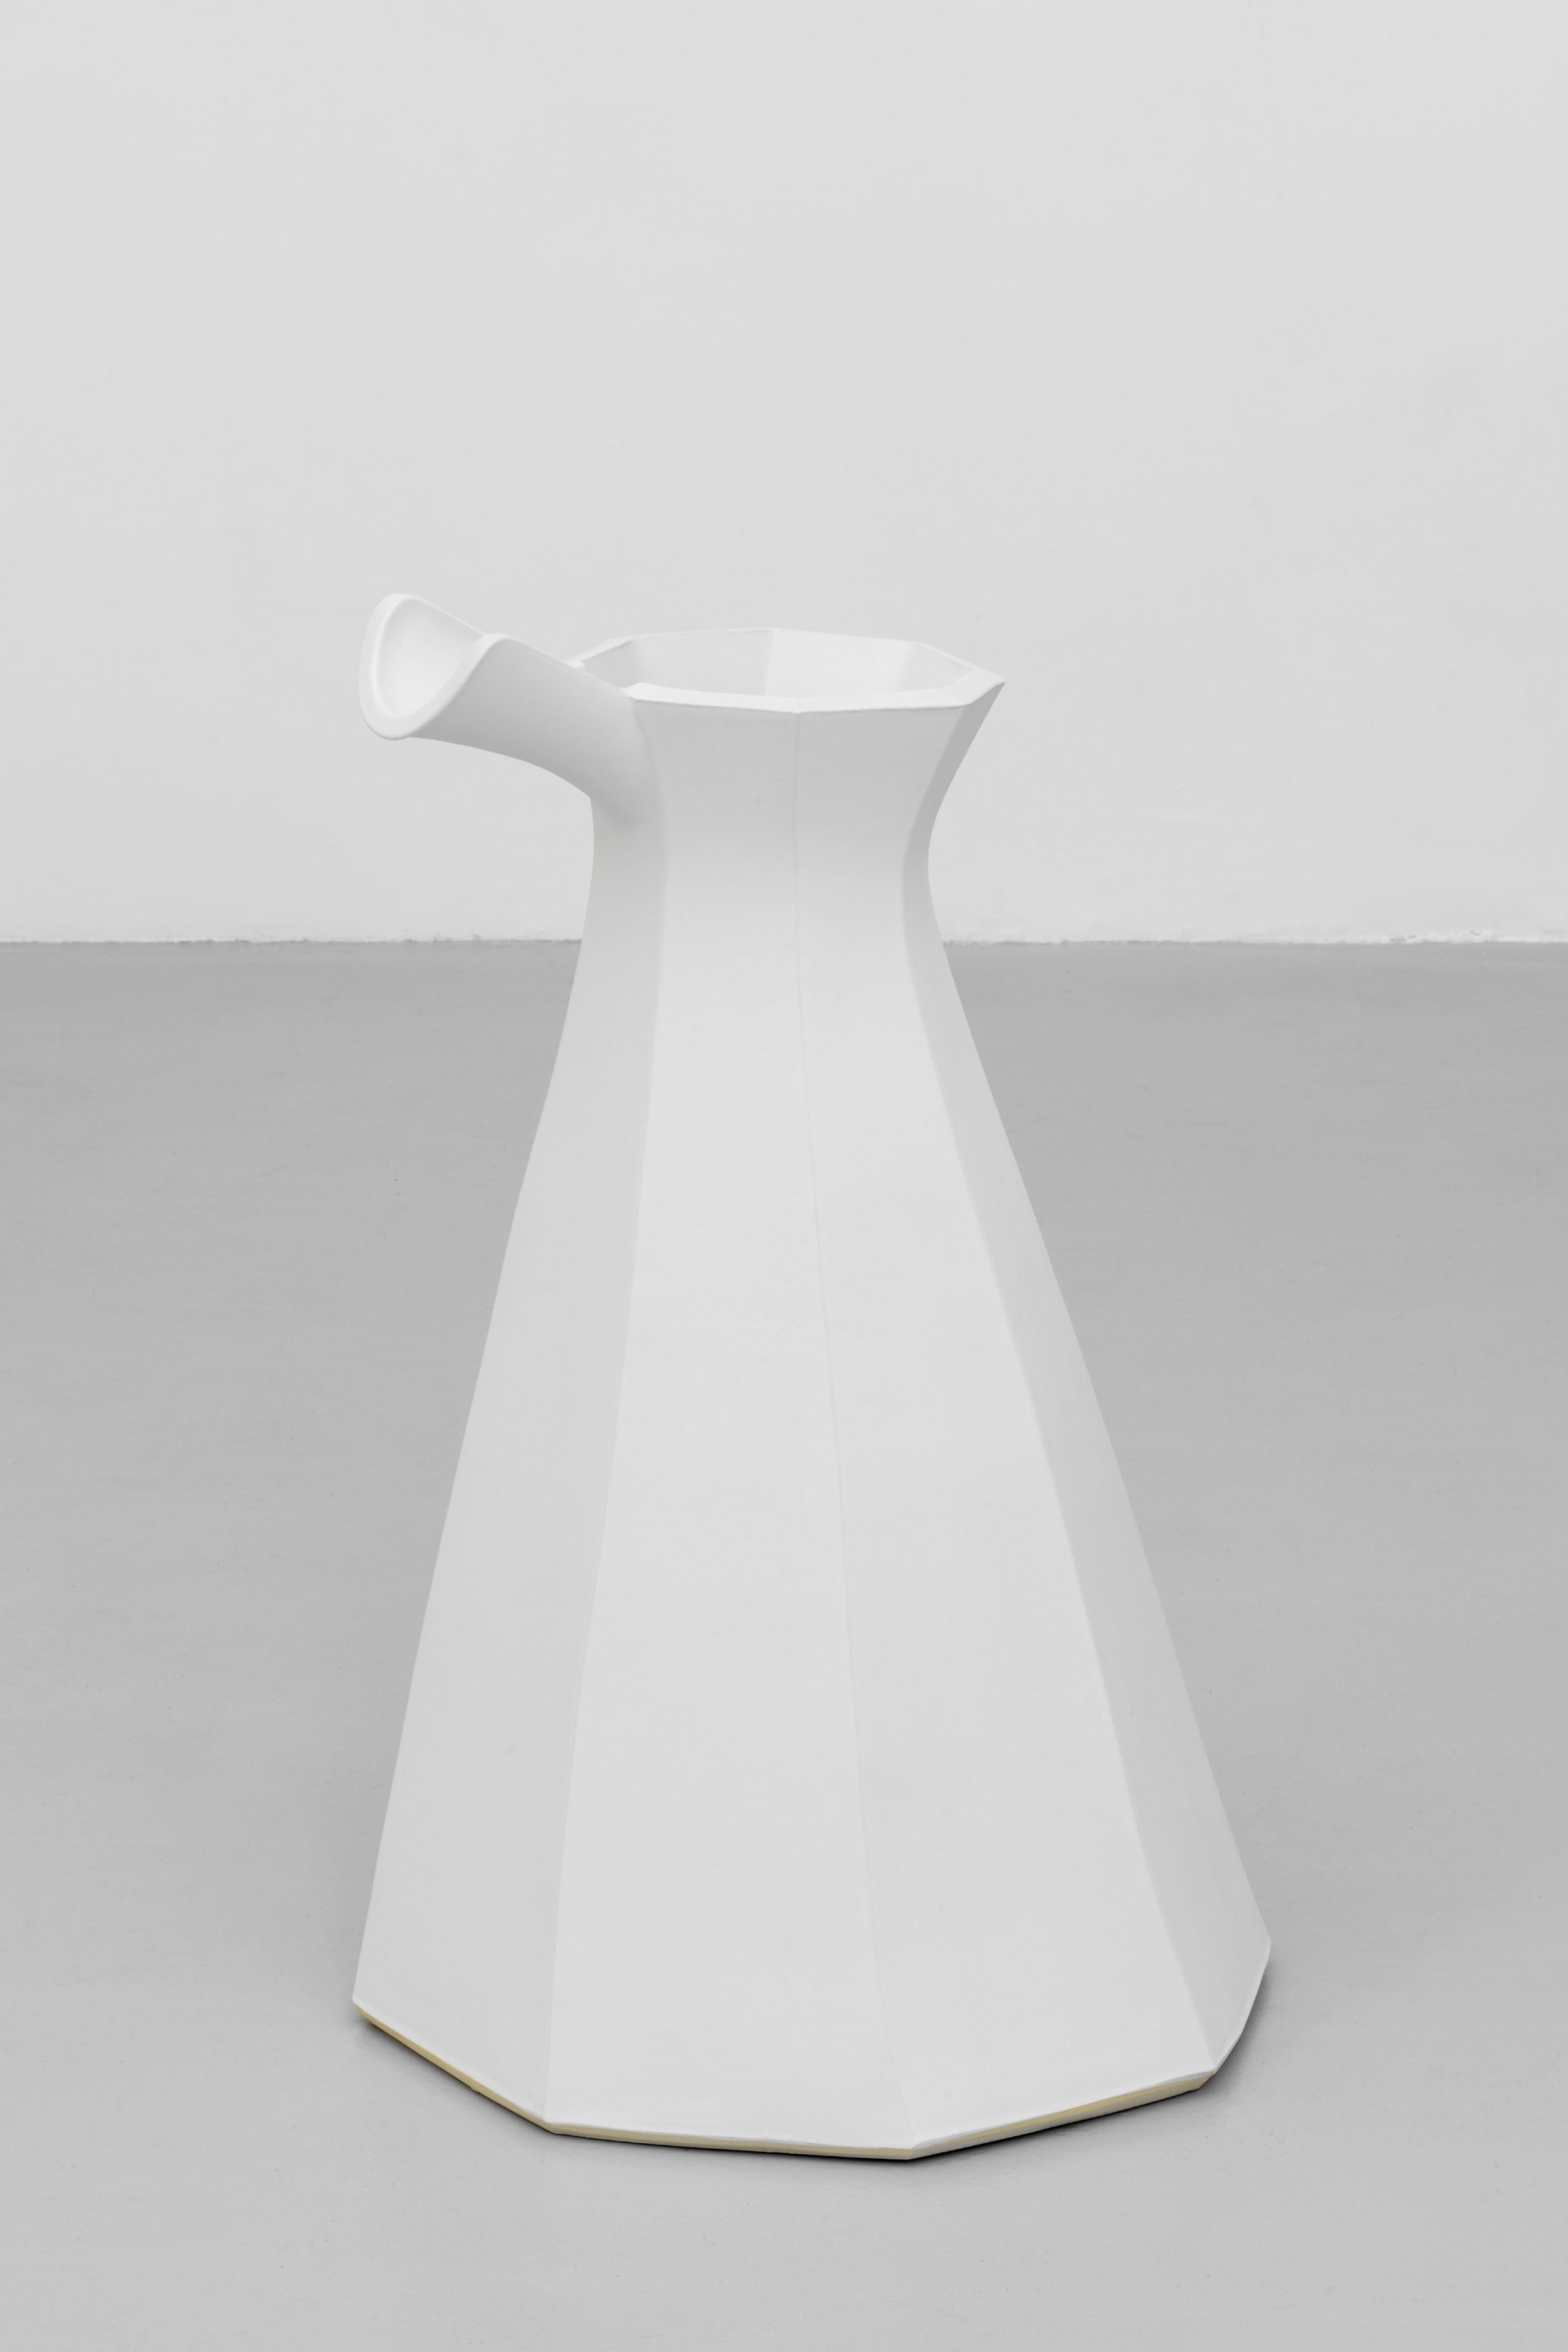 Julian Stair – Large Faceted Jug – 2018, 99×45 cm